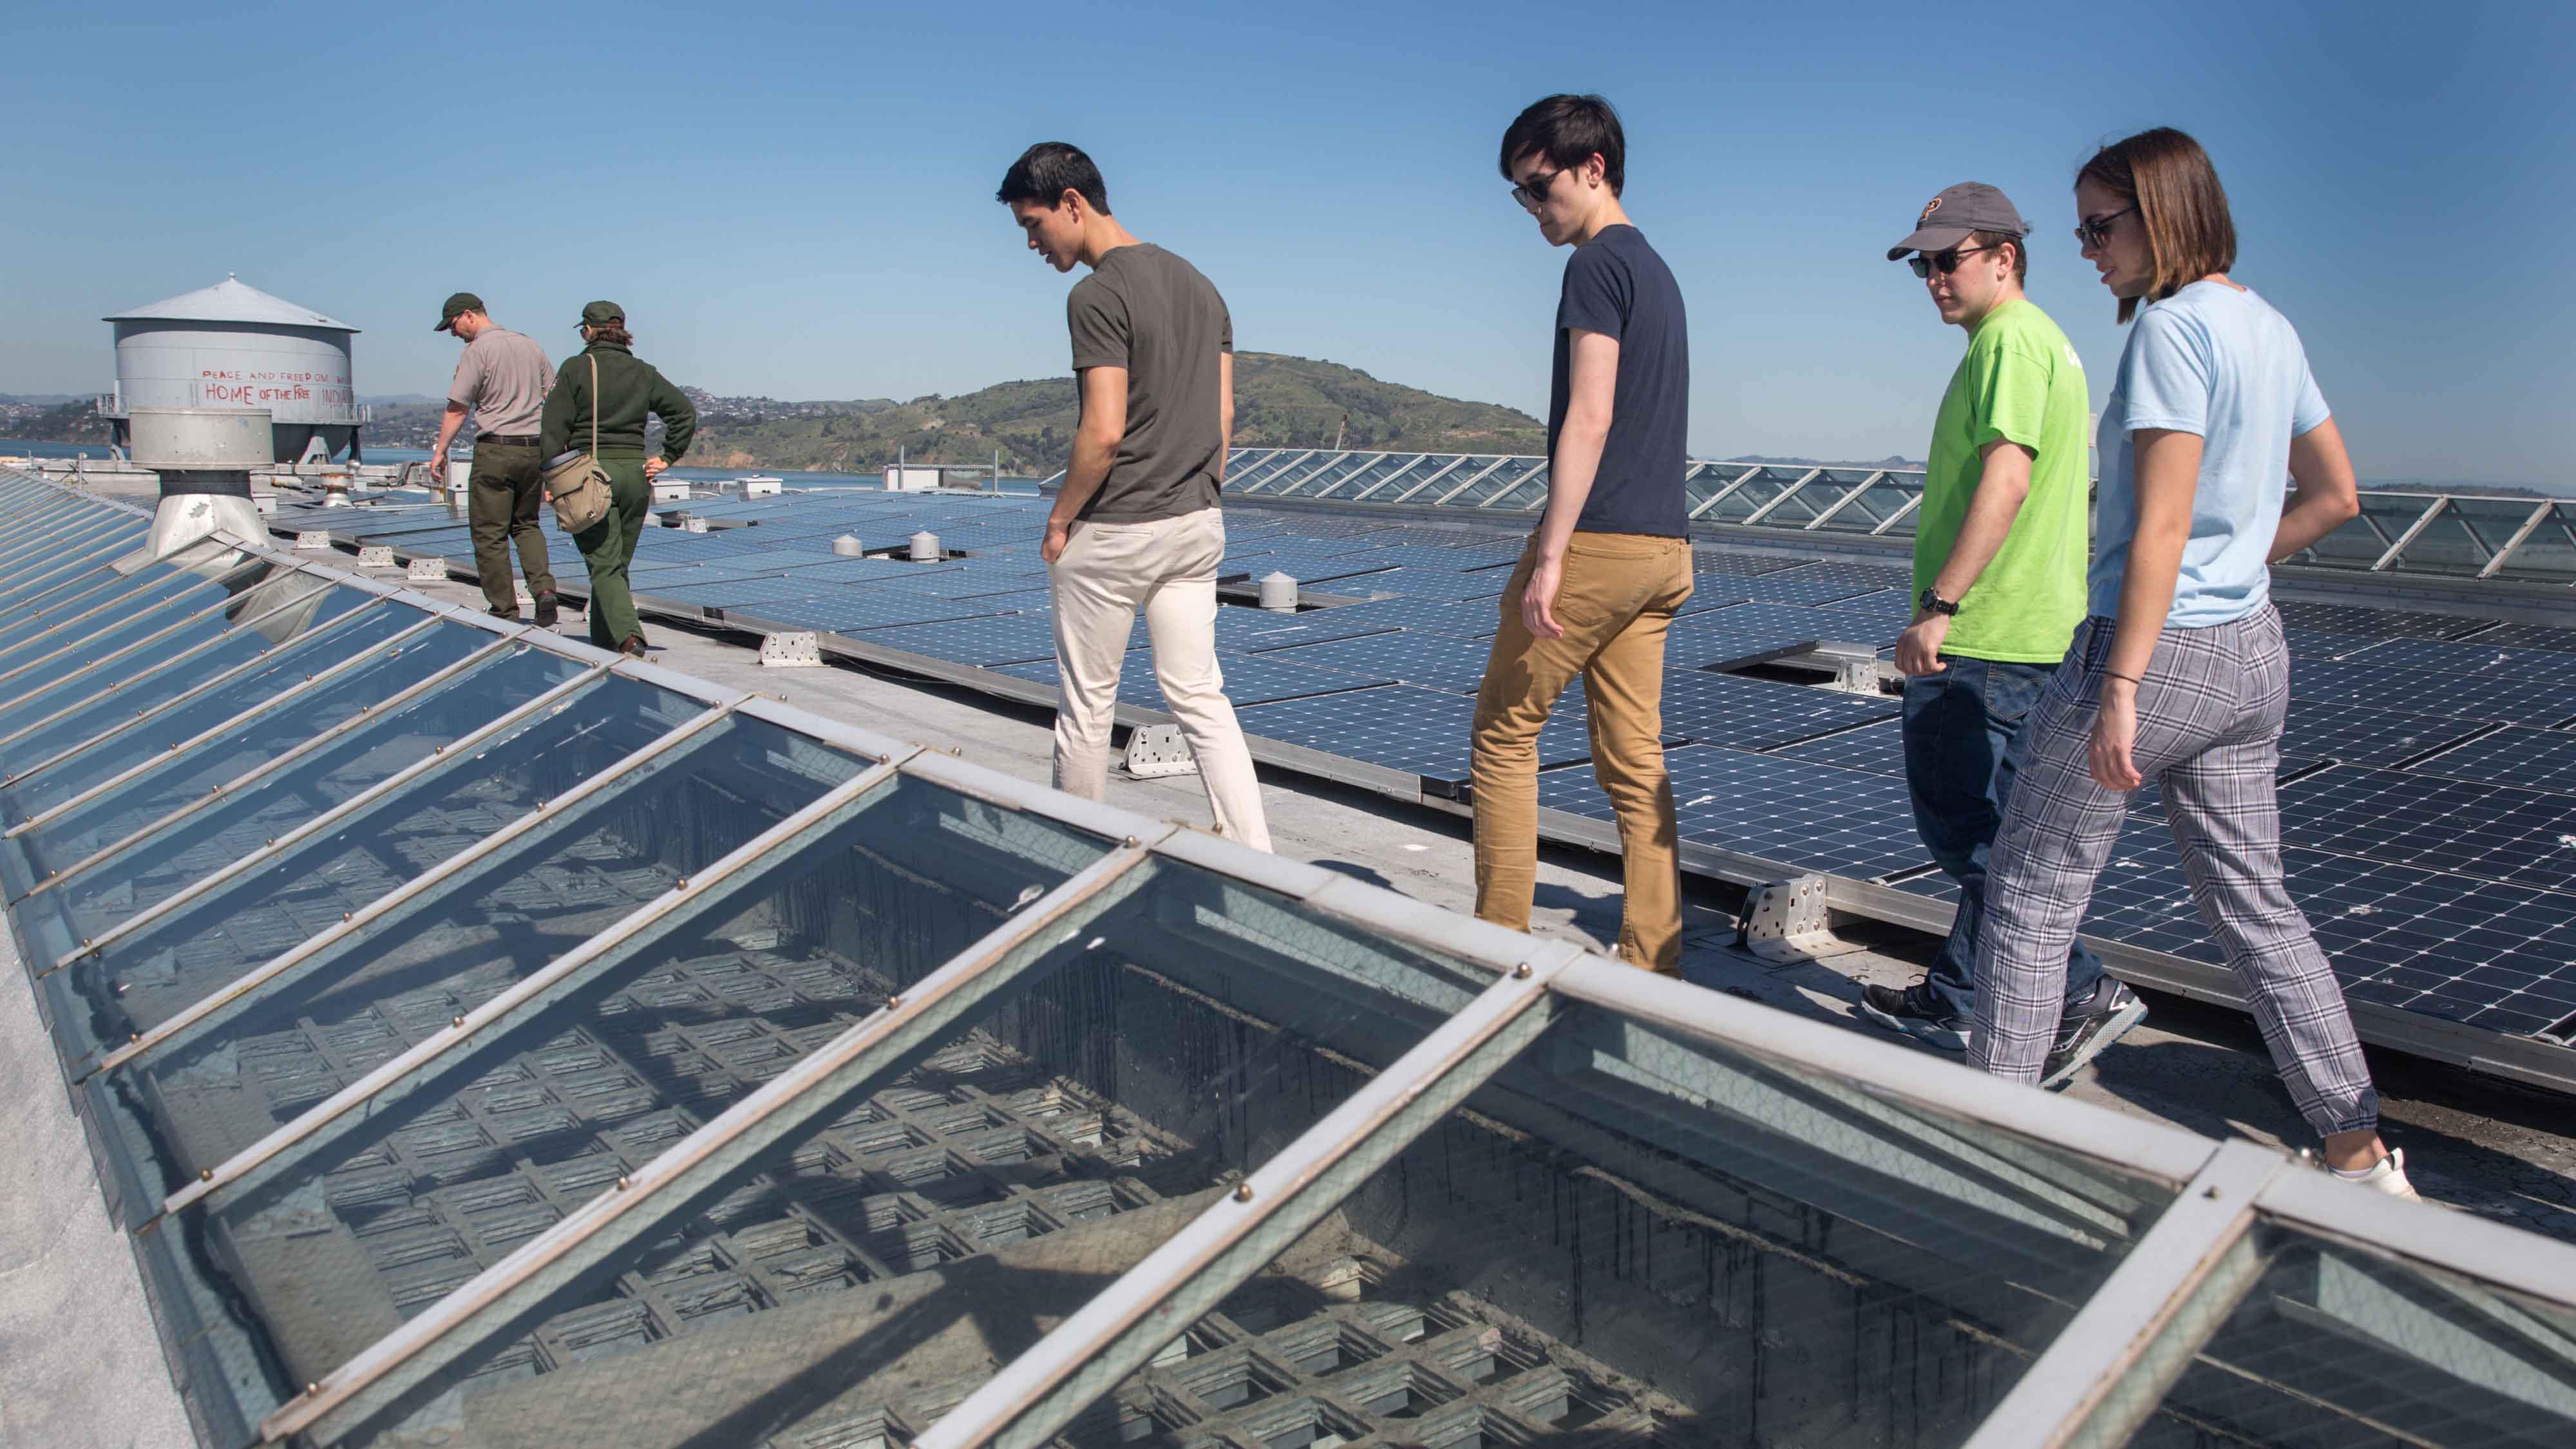 Students pass solar panels on Alcatraz rooftop